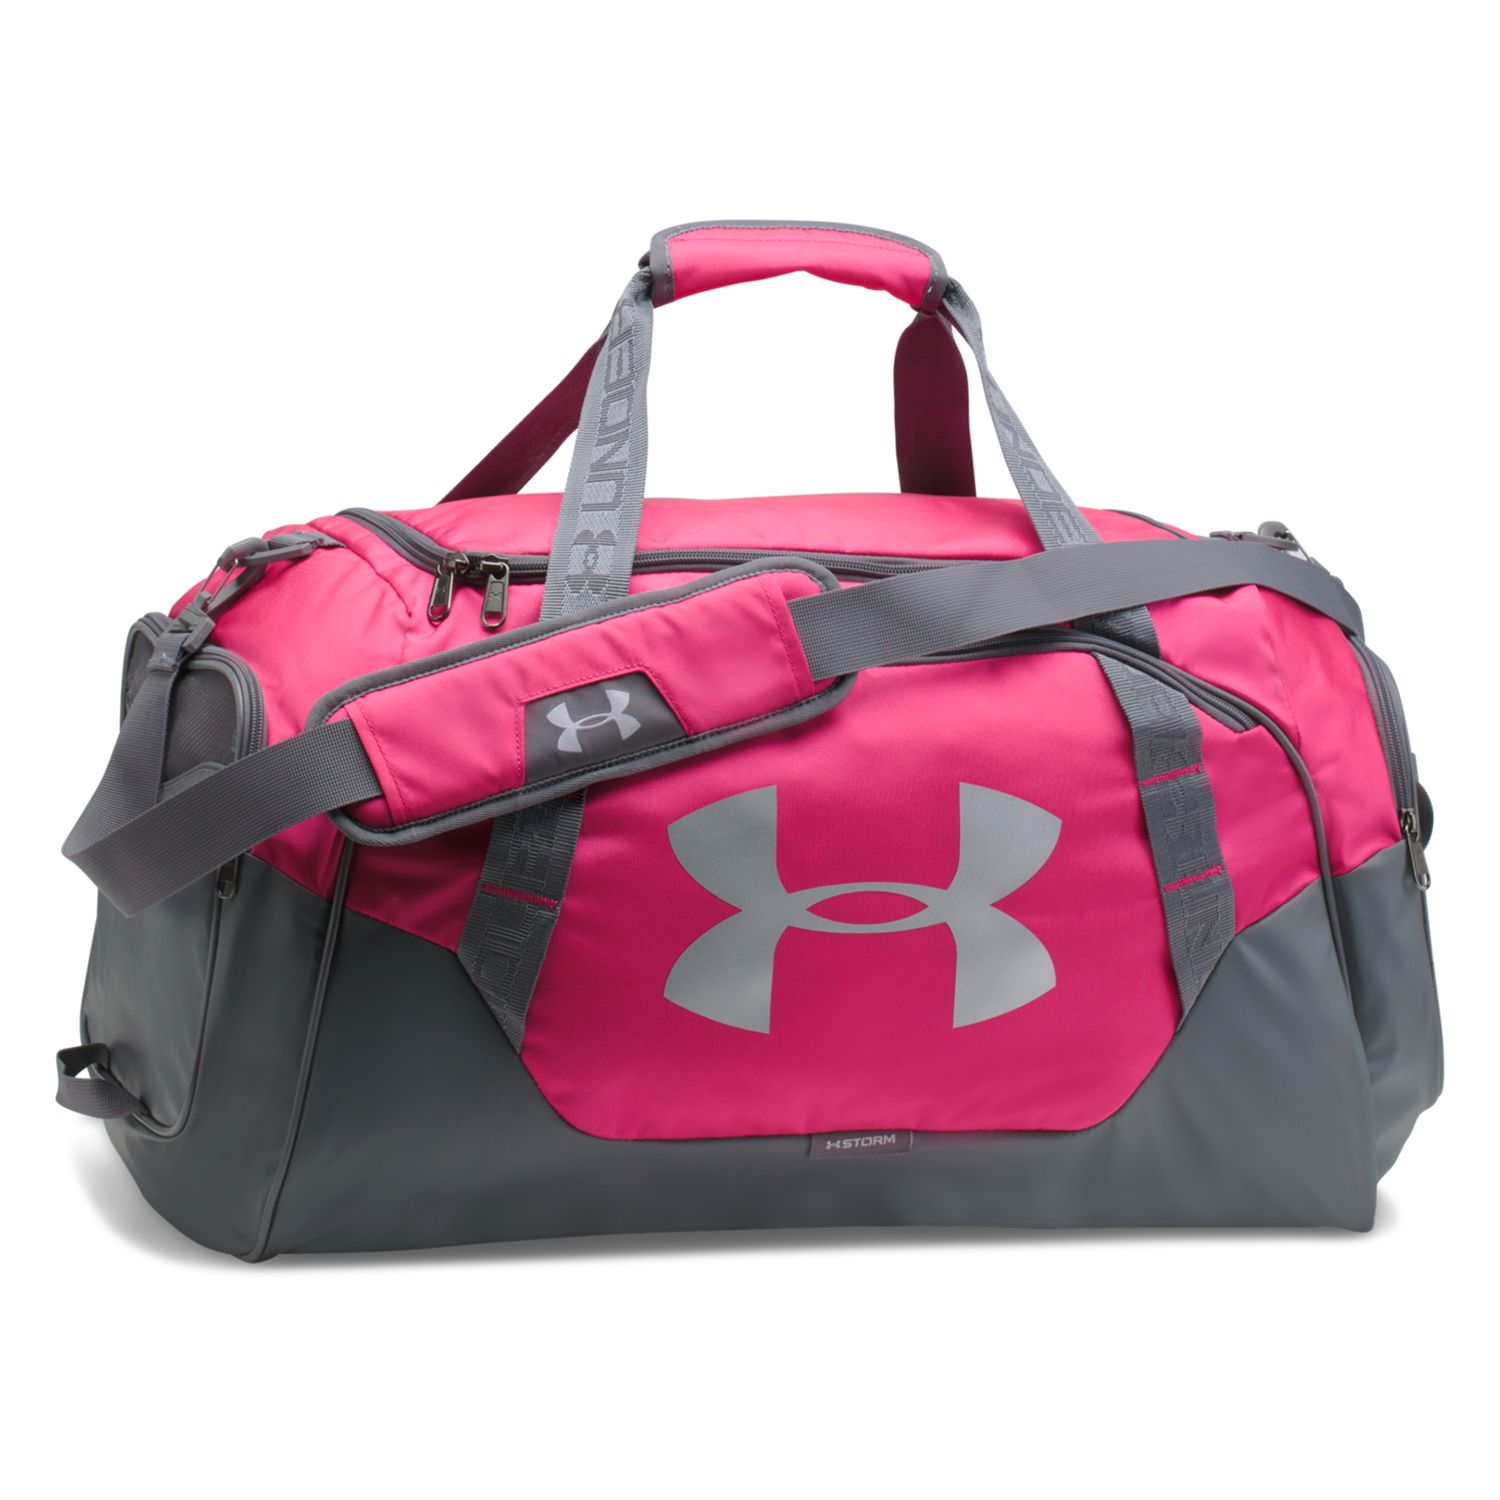 pink under armour bag